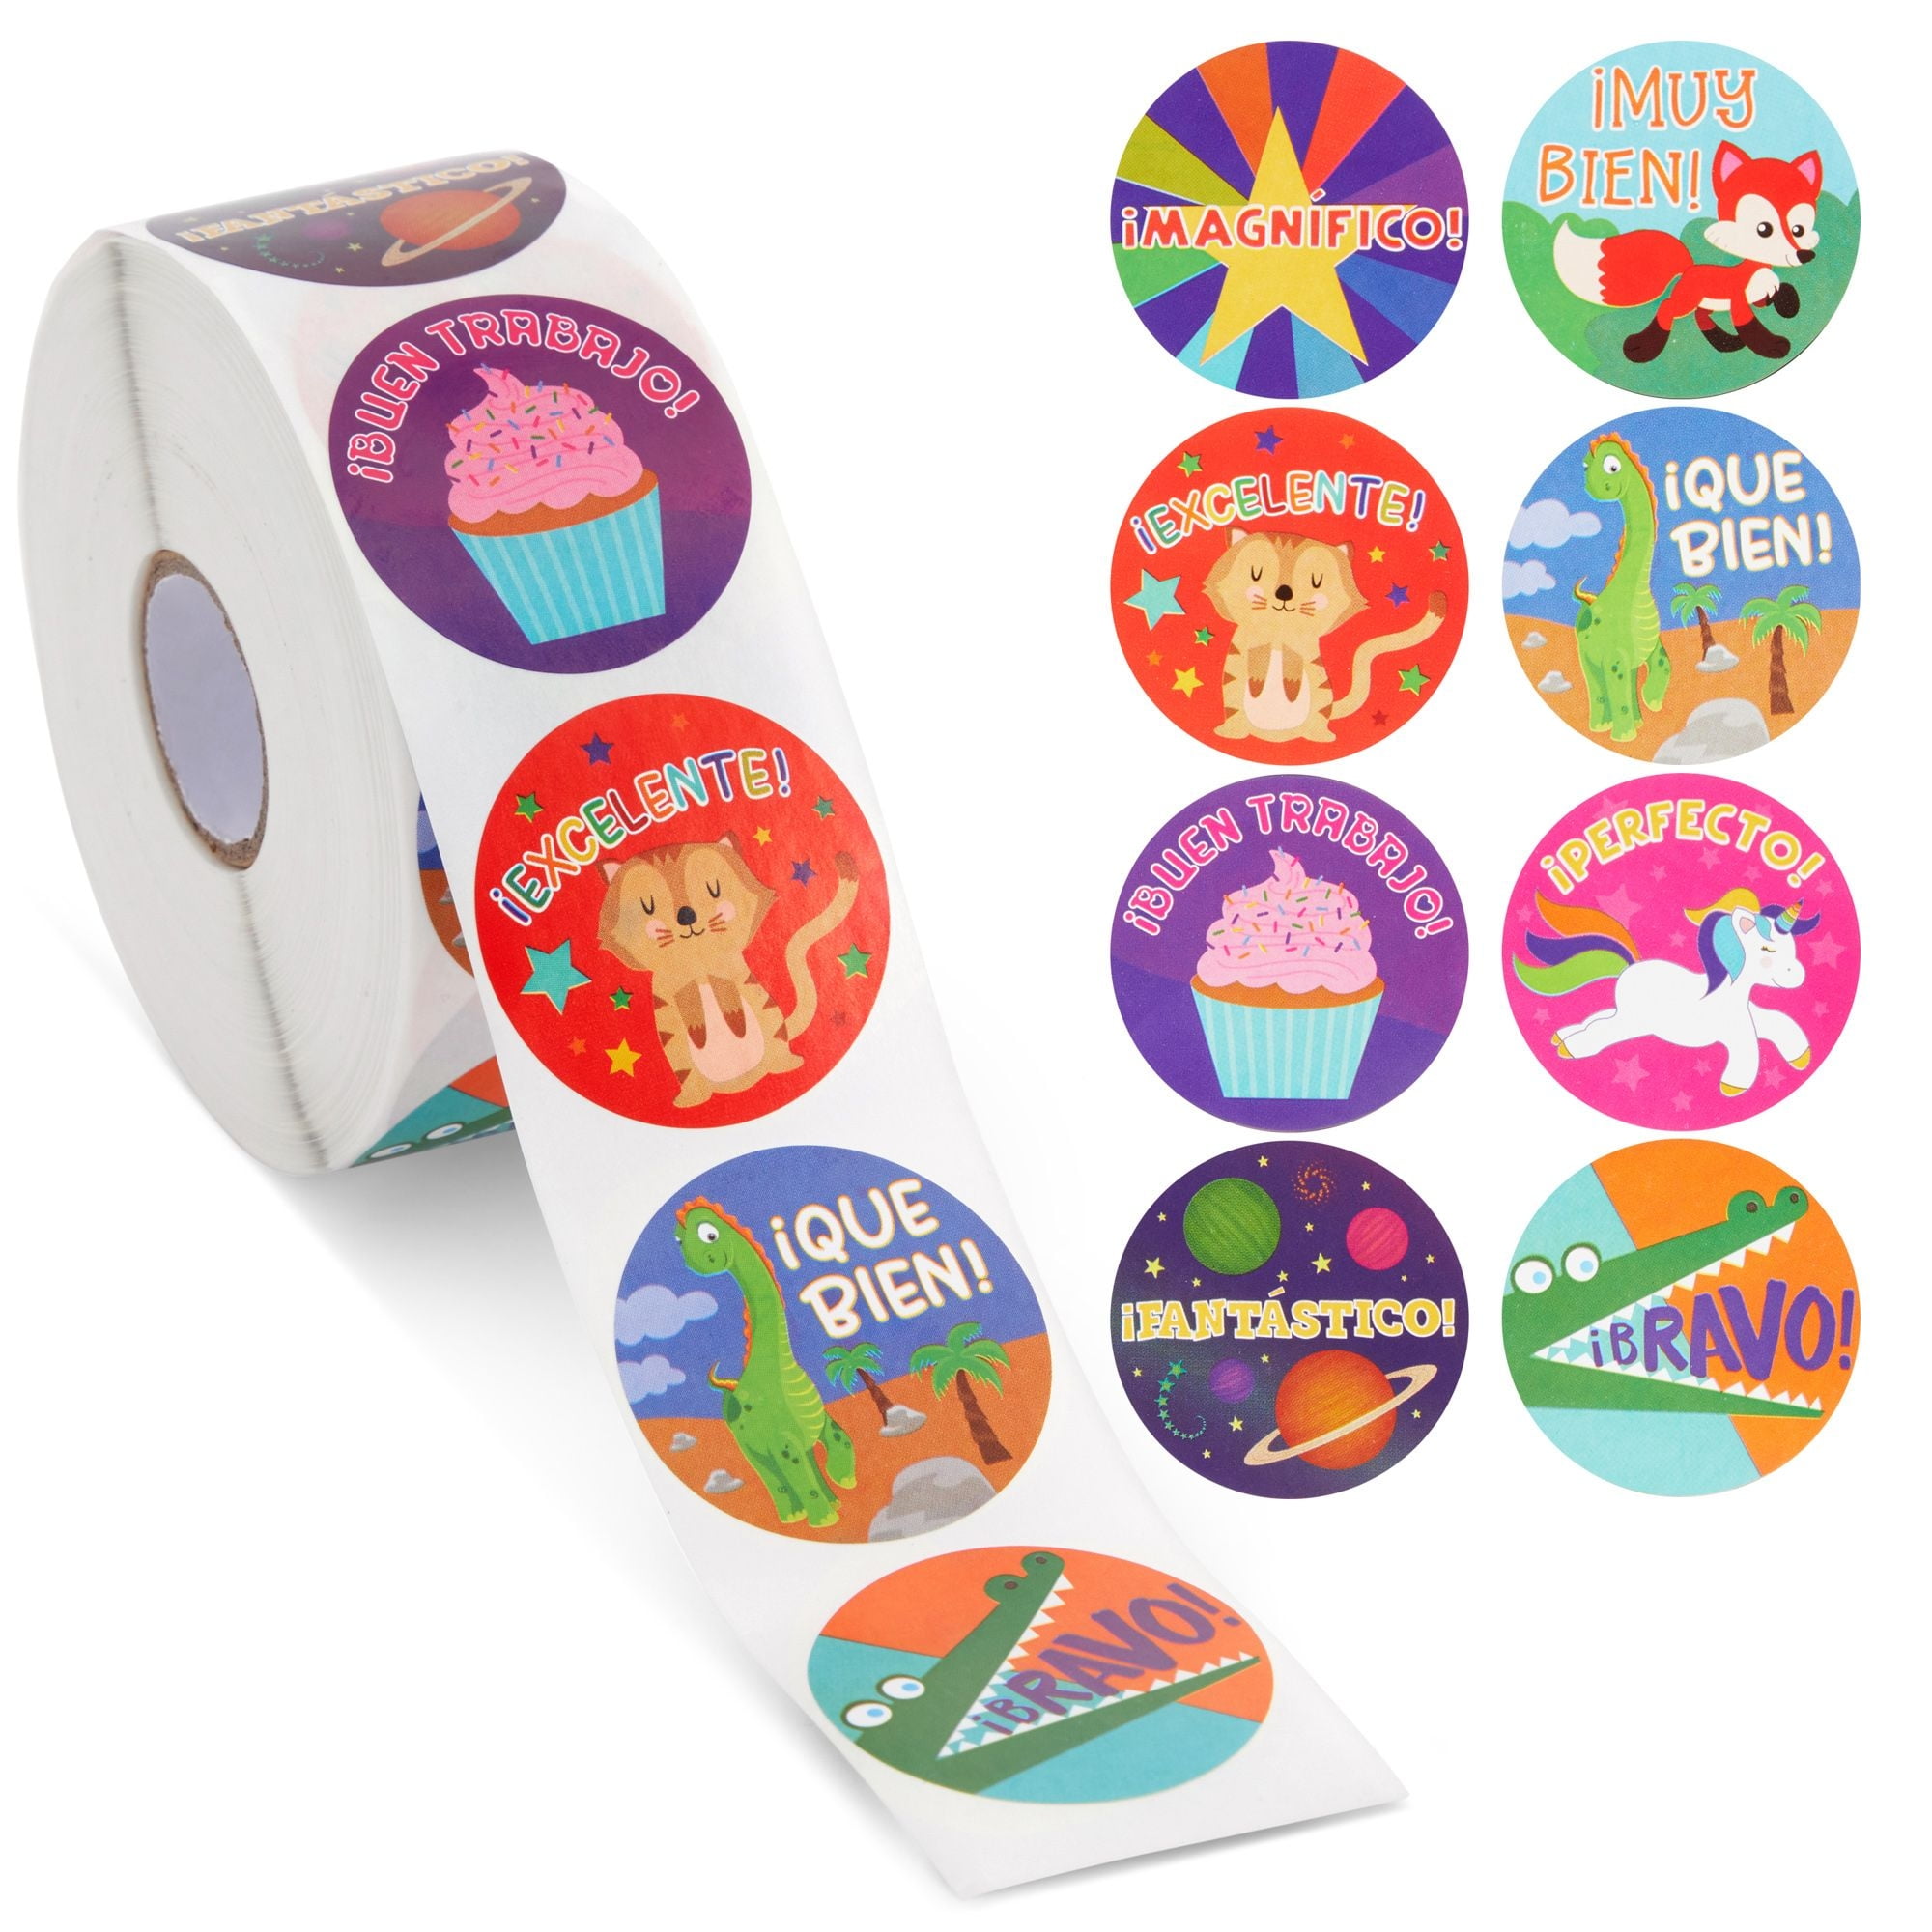 Gooji Small Reward Stickers for Kids, 1008 Pc. Sticker Pack for Teachers, Classroom, Motivational Class Supplies for Students, Toddler Good Job